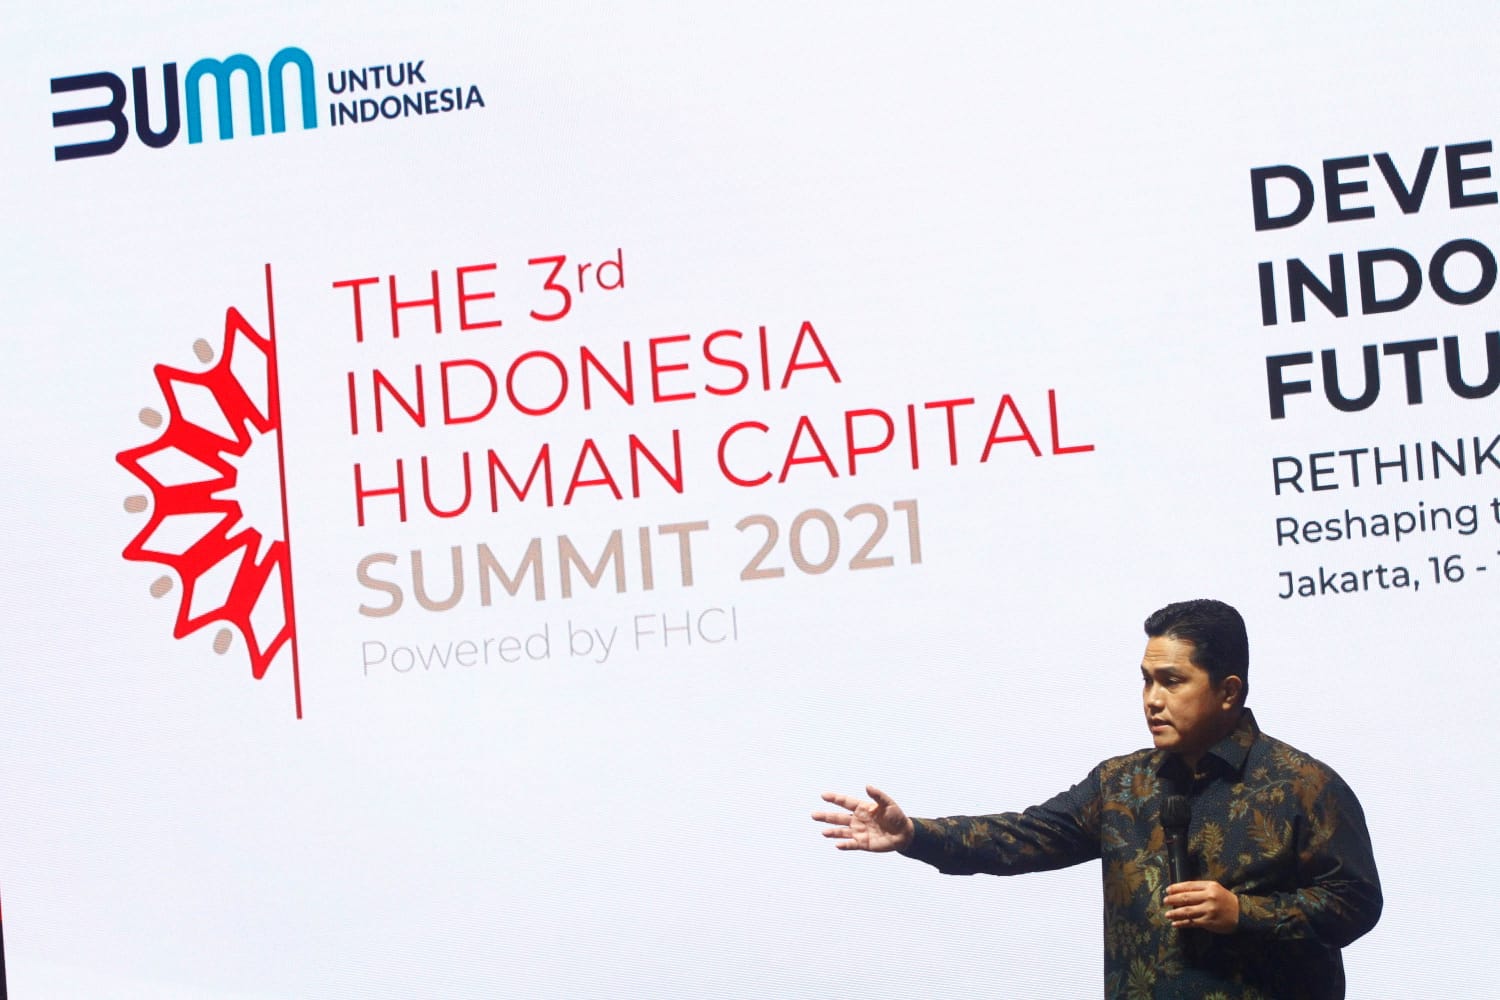 Indonesia Human Capital Summit 2021